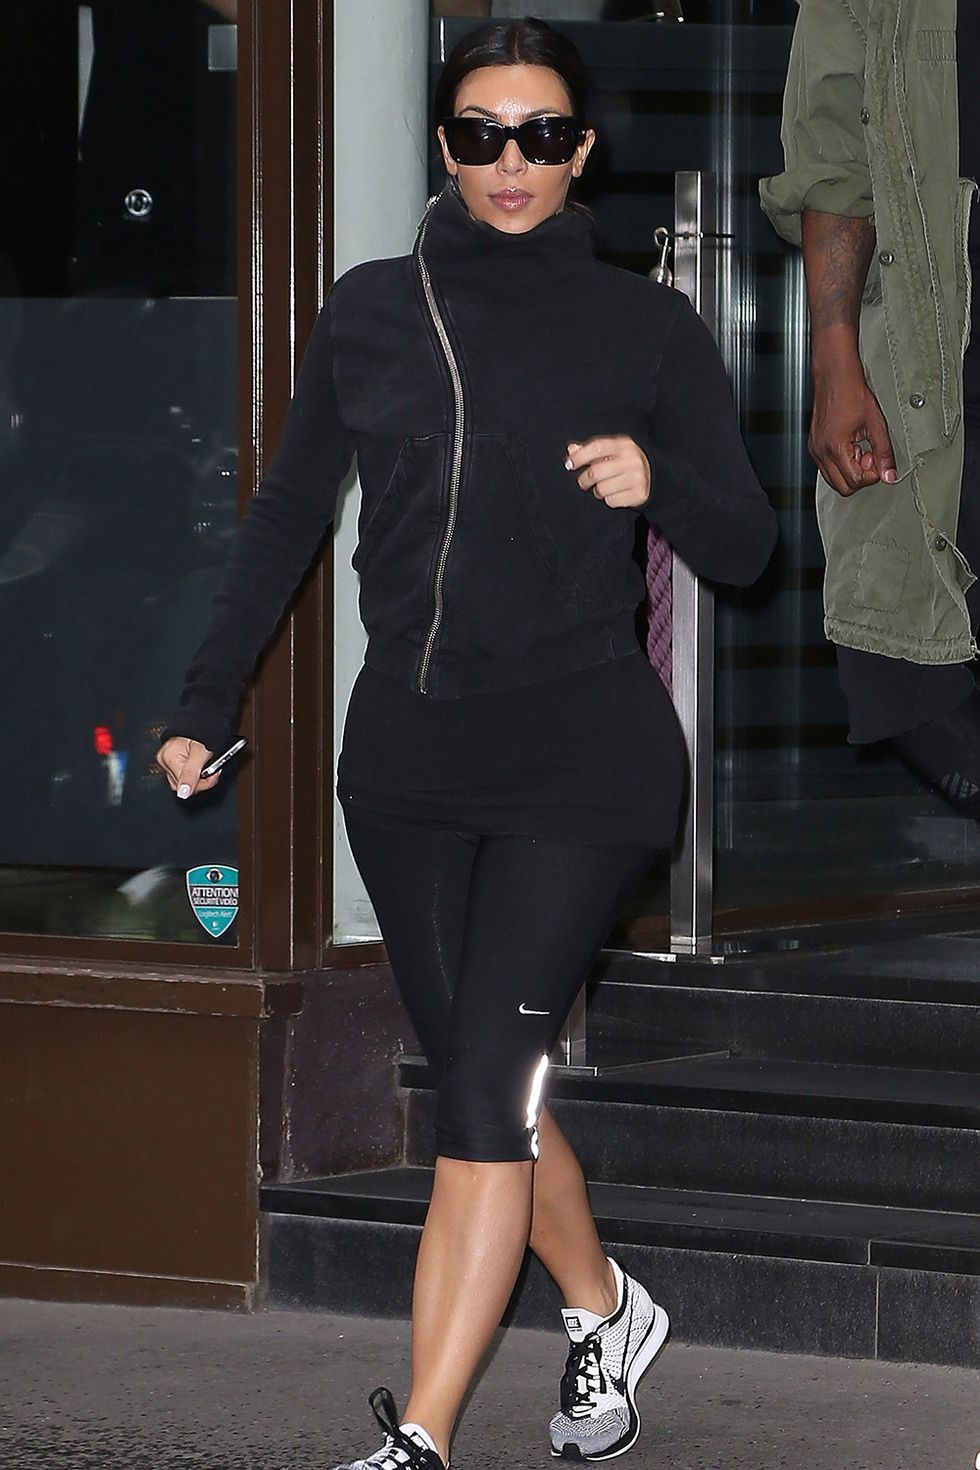 Kim Kardashian at the gym - Endomorph body type